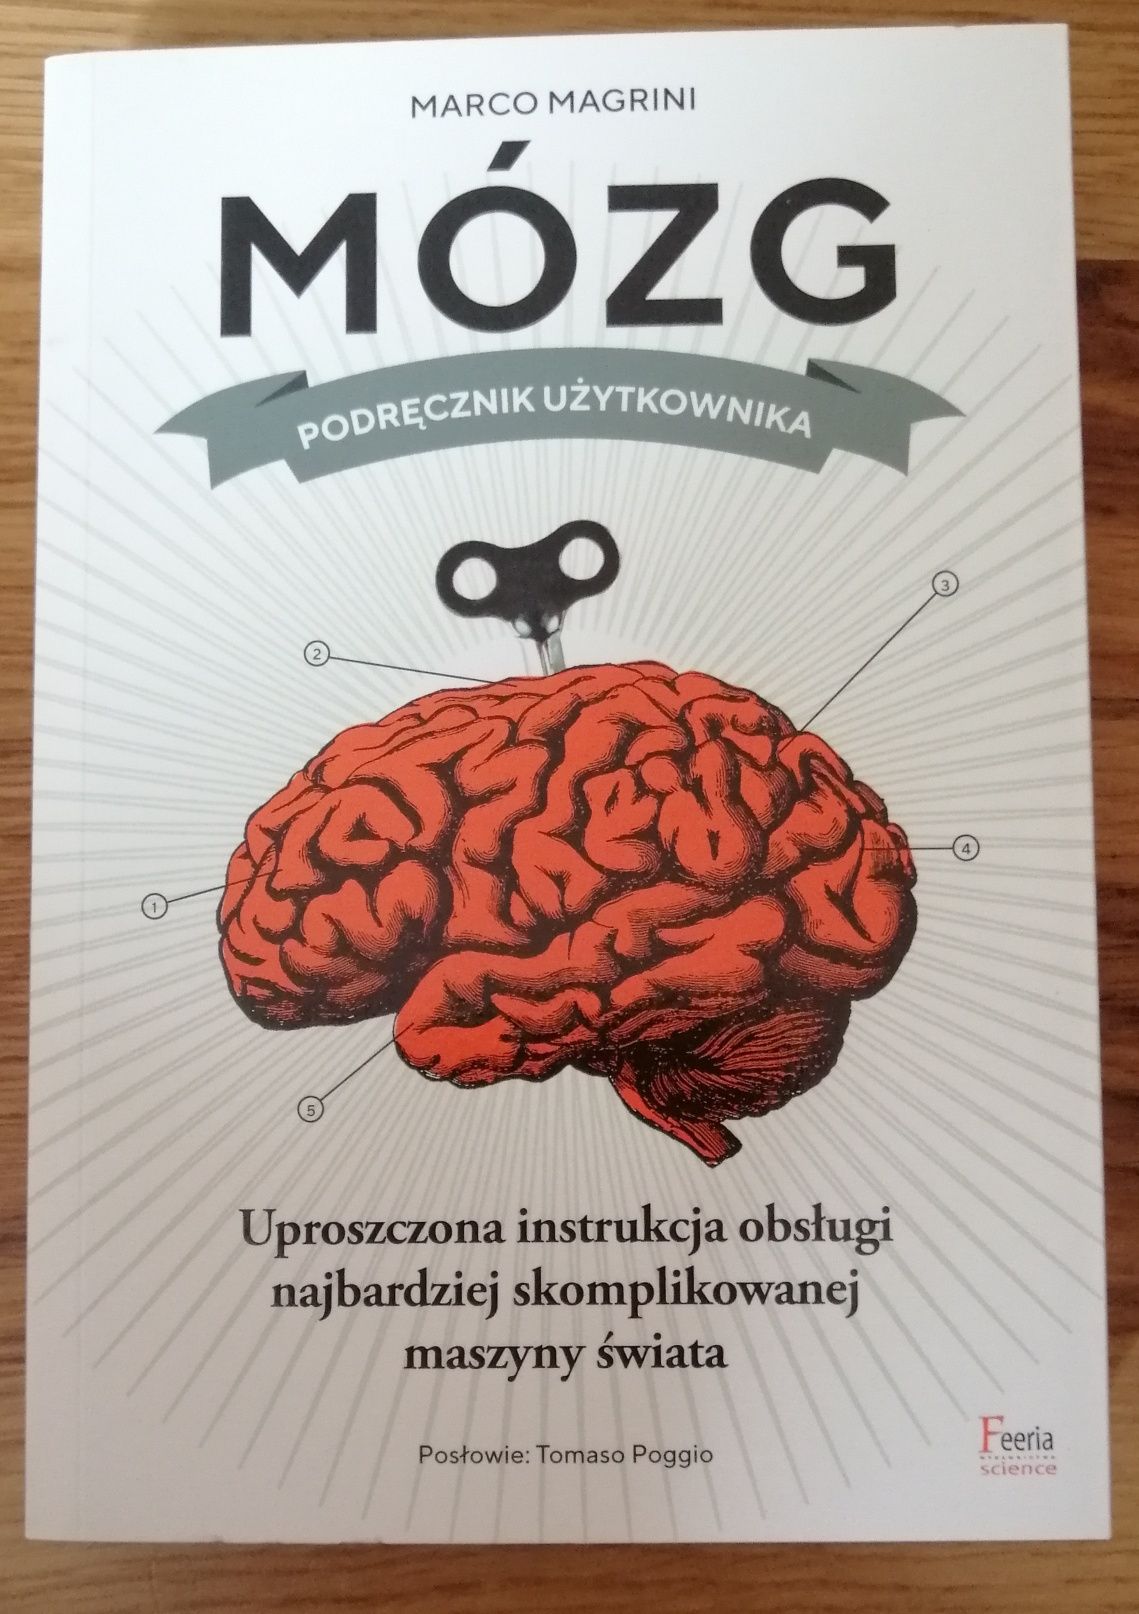 Marco Magrini "Mózg. Podręcznik użytkownika"